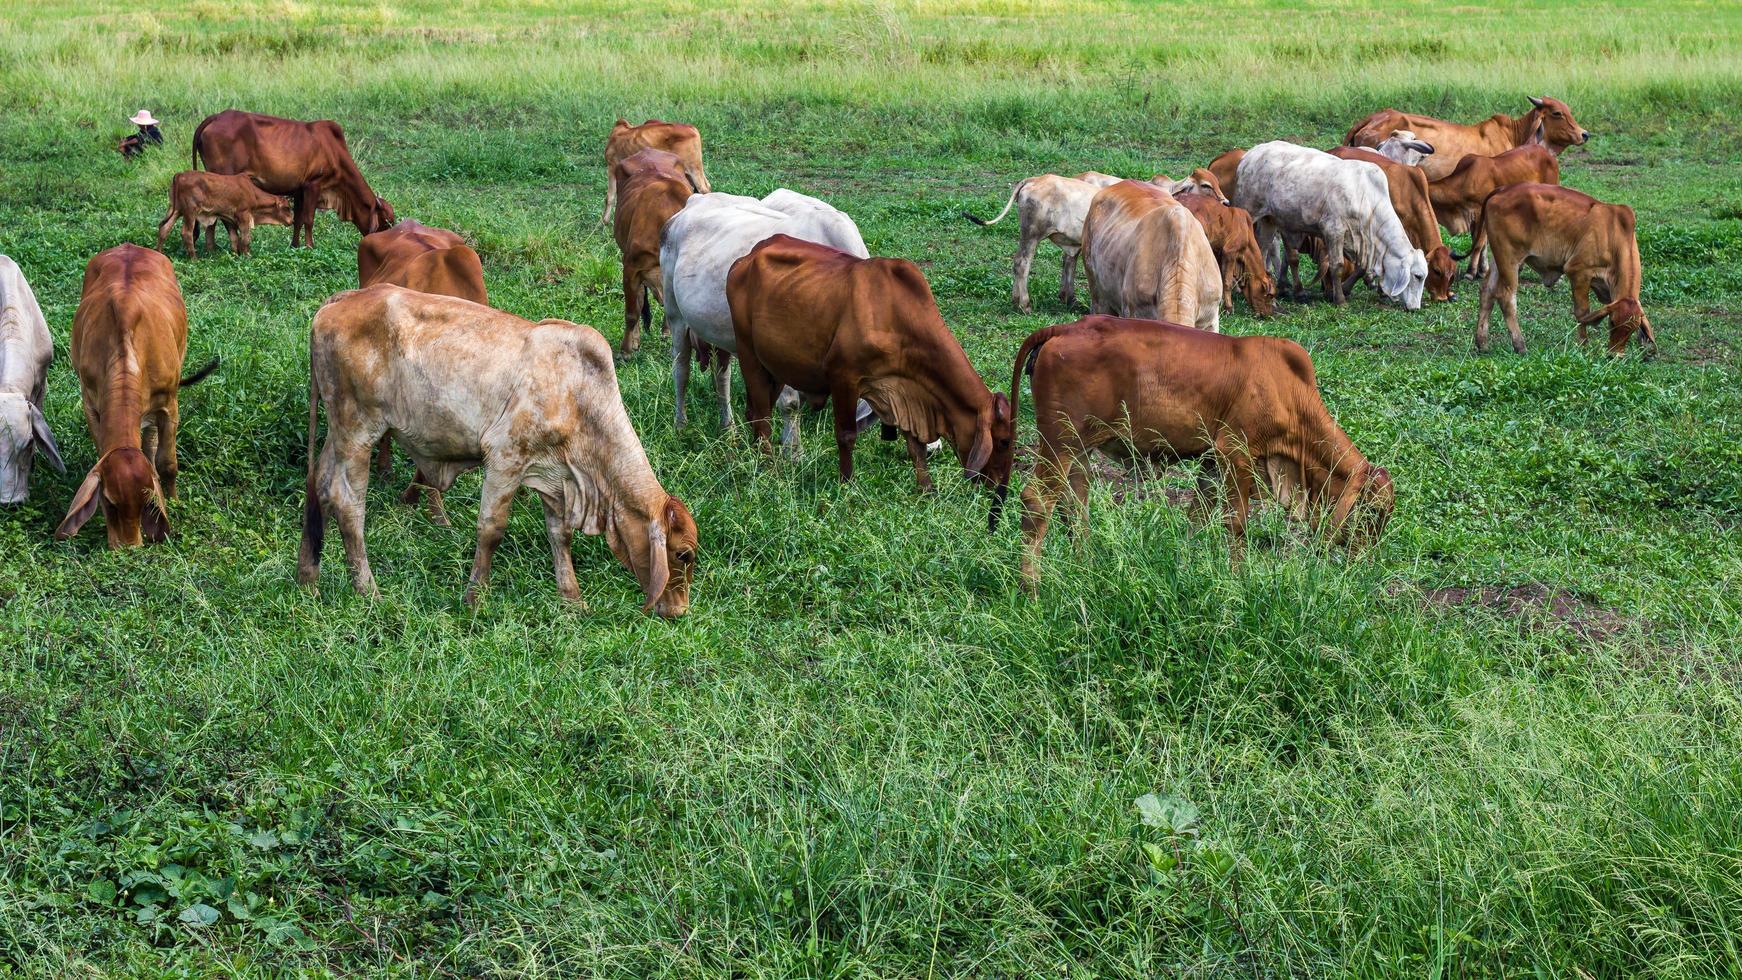 Livestock herds of cattle grazing photo